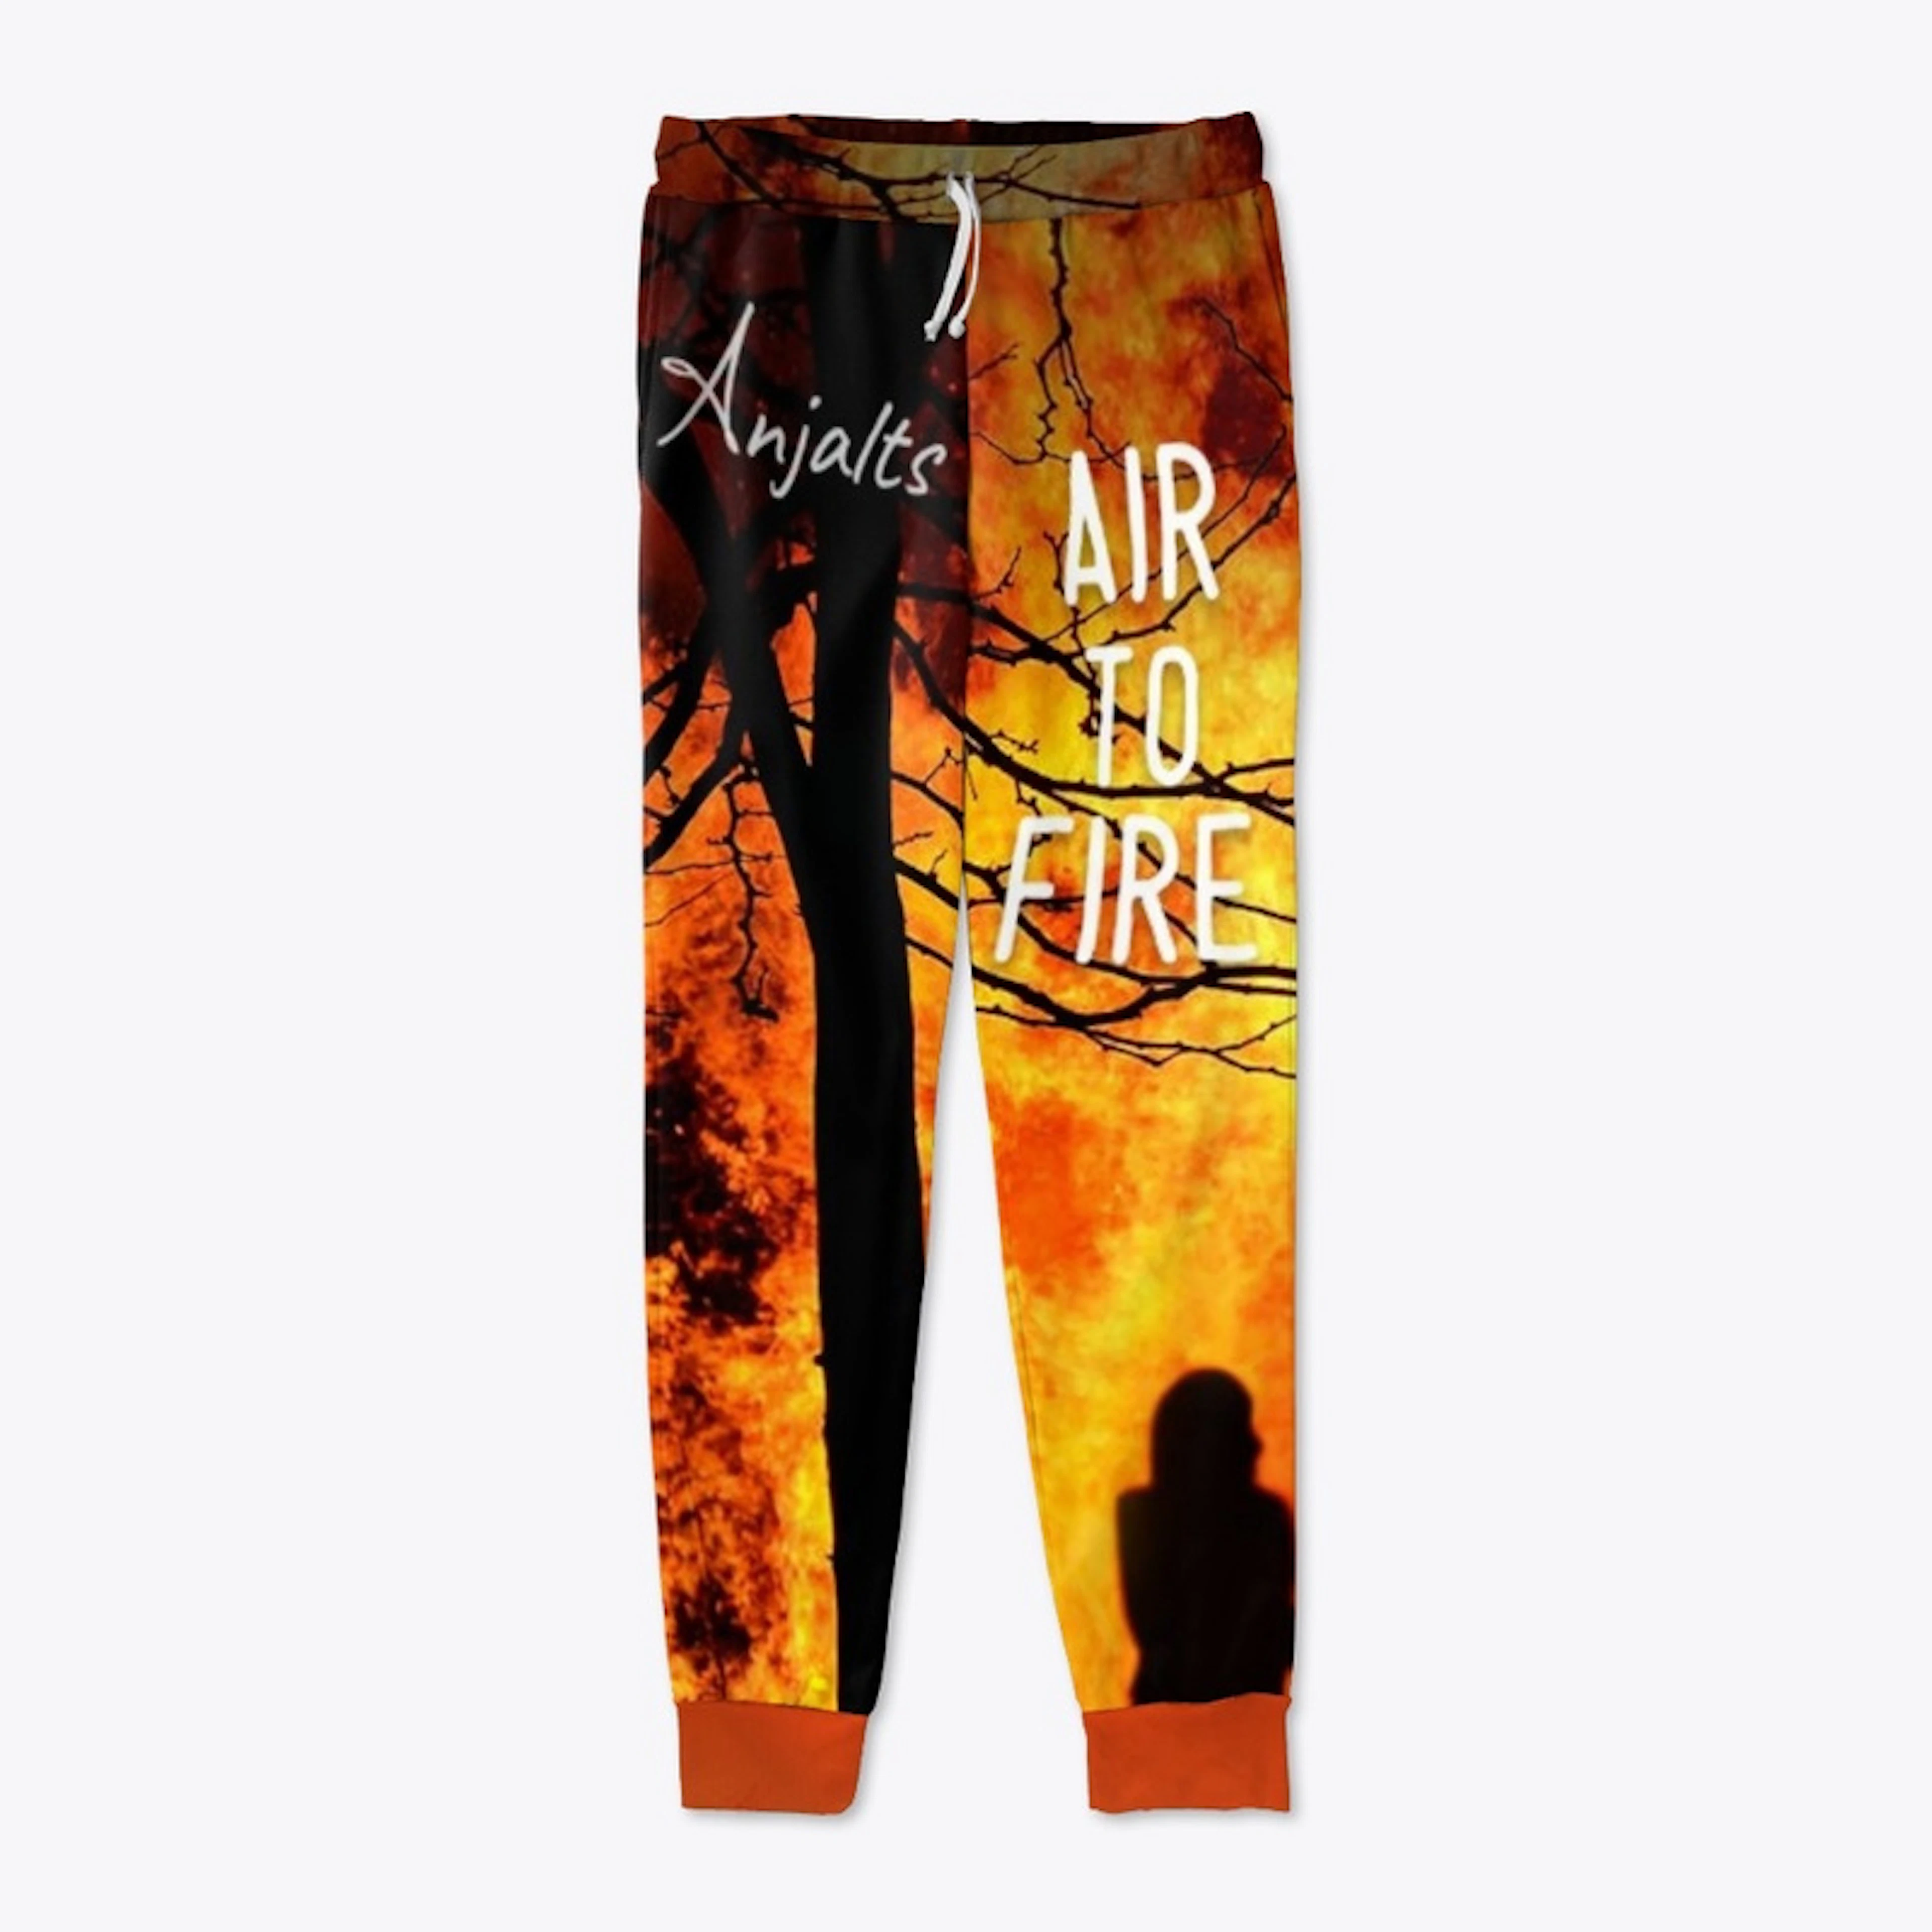 Anjalts "Air to Fire" Jogging Pants